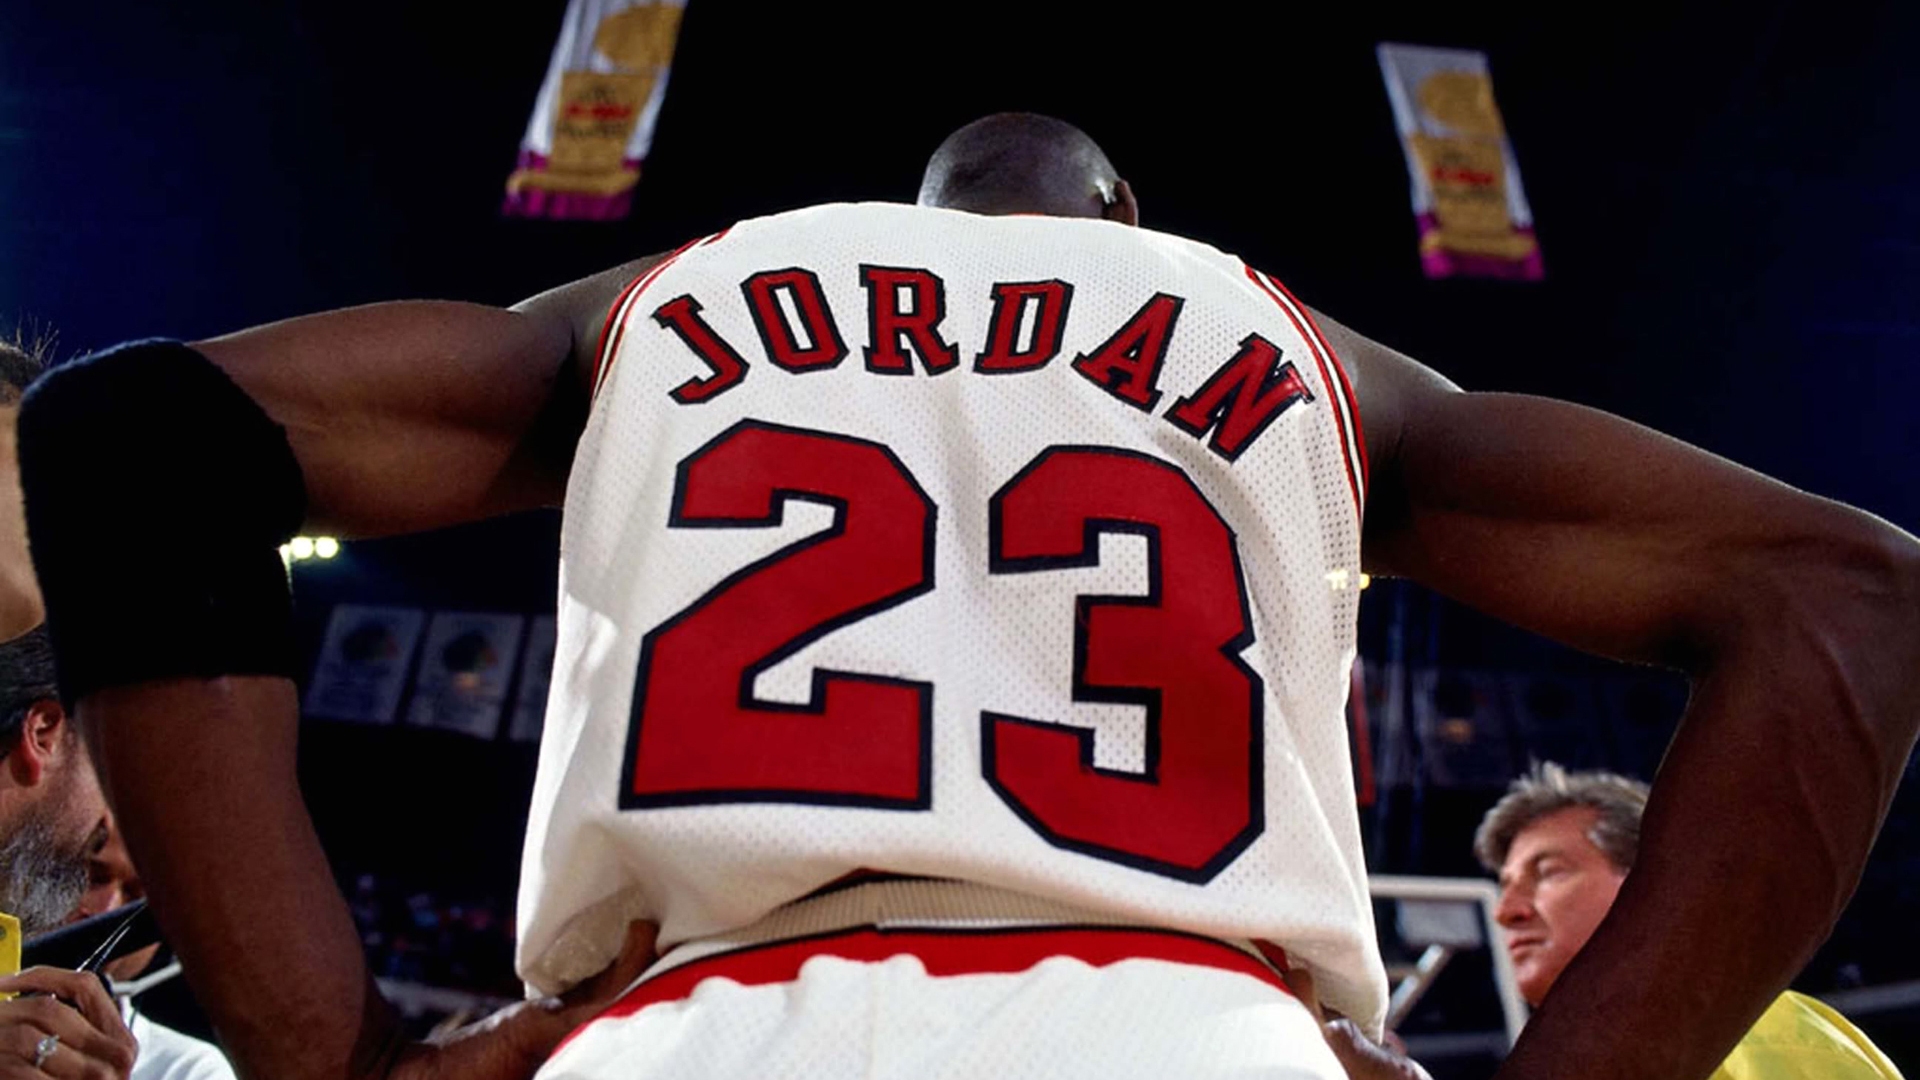 Michael Jordan NBA for 1920 x 1080 HDTV 1080p resolution